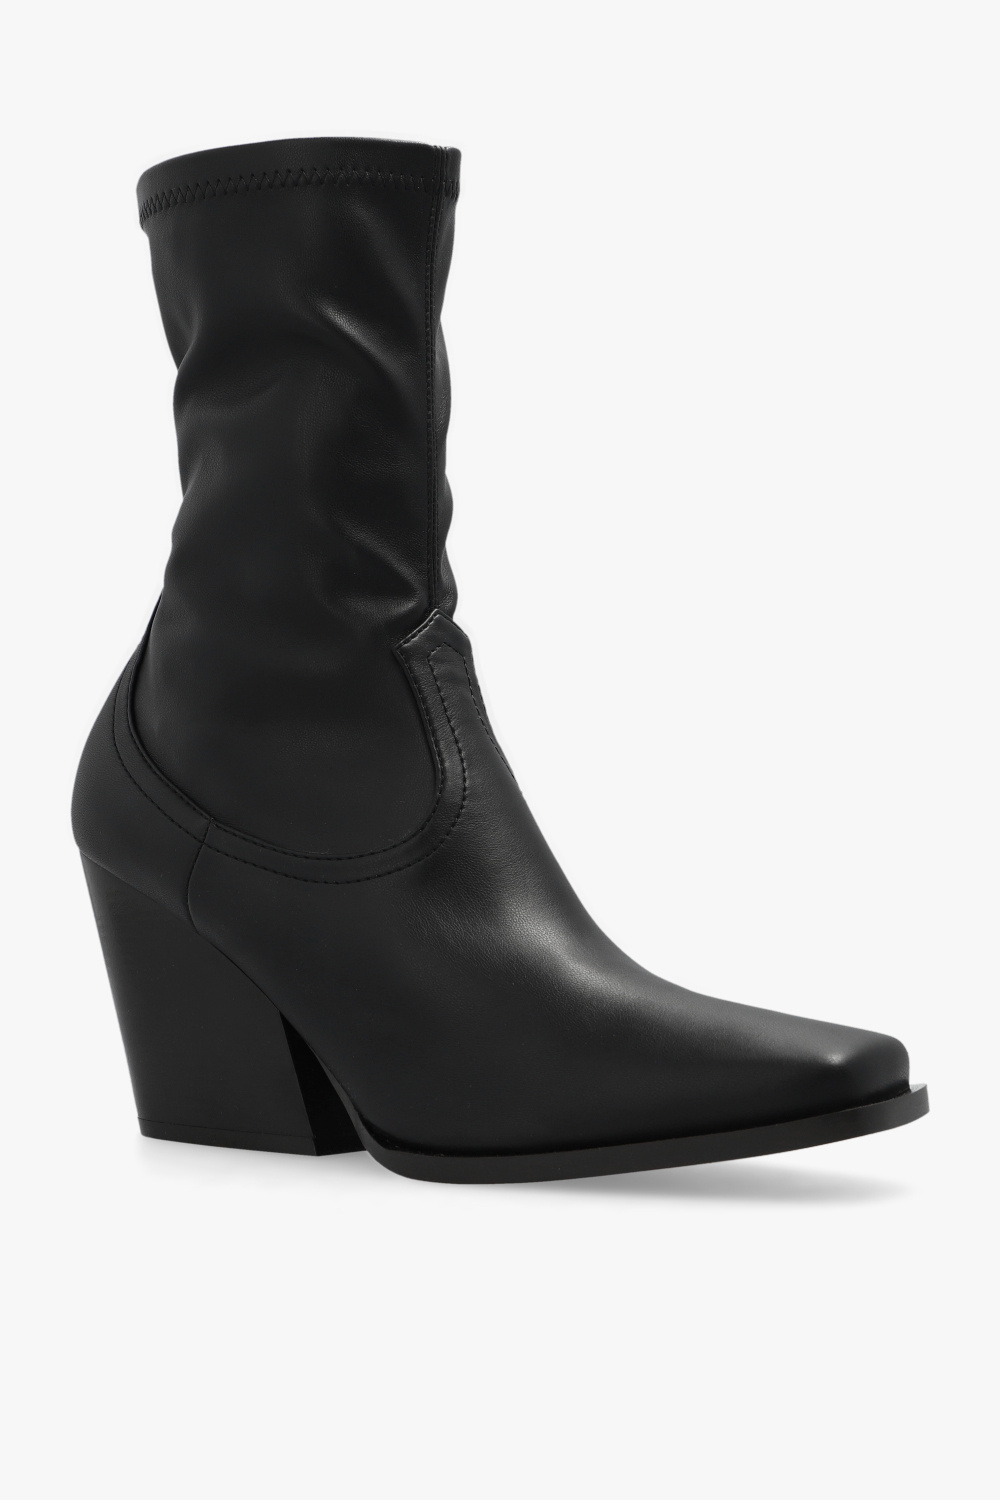 Stella McCartney ‘Cowboy’ heeled ankle boots